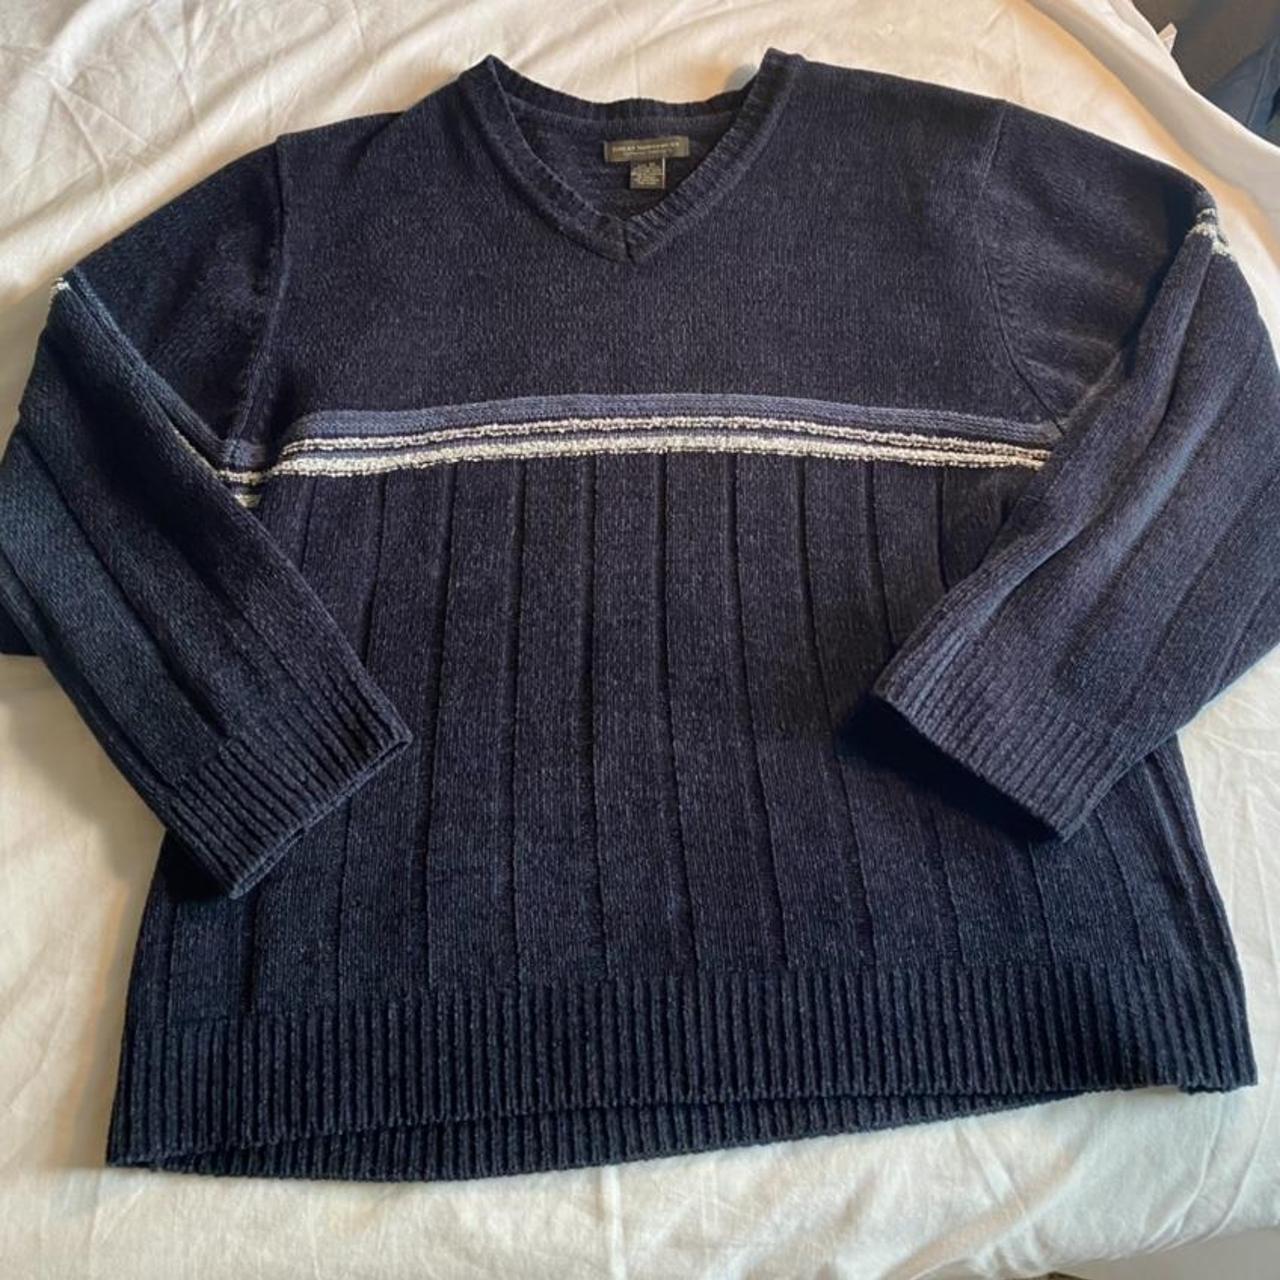 Beautiful vintage navy blue 90s style warm sweater!... - Depop